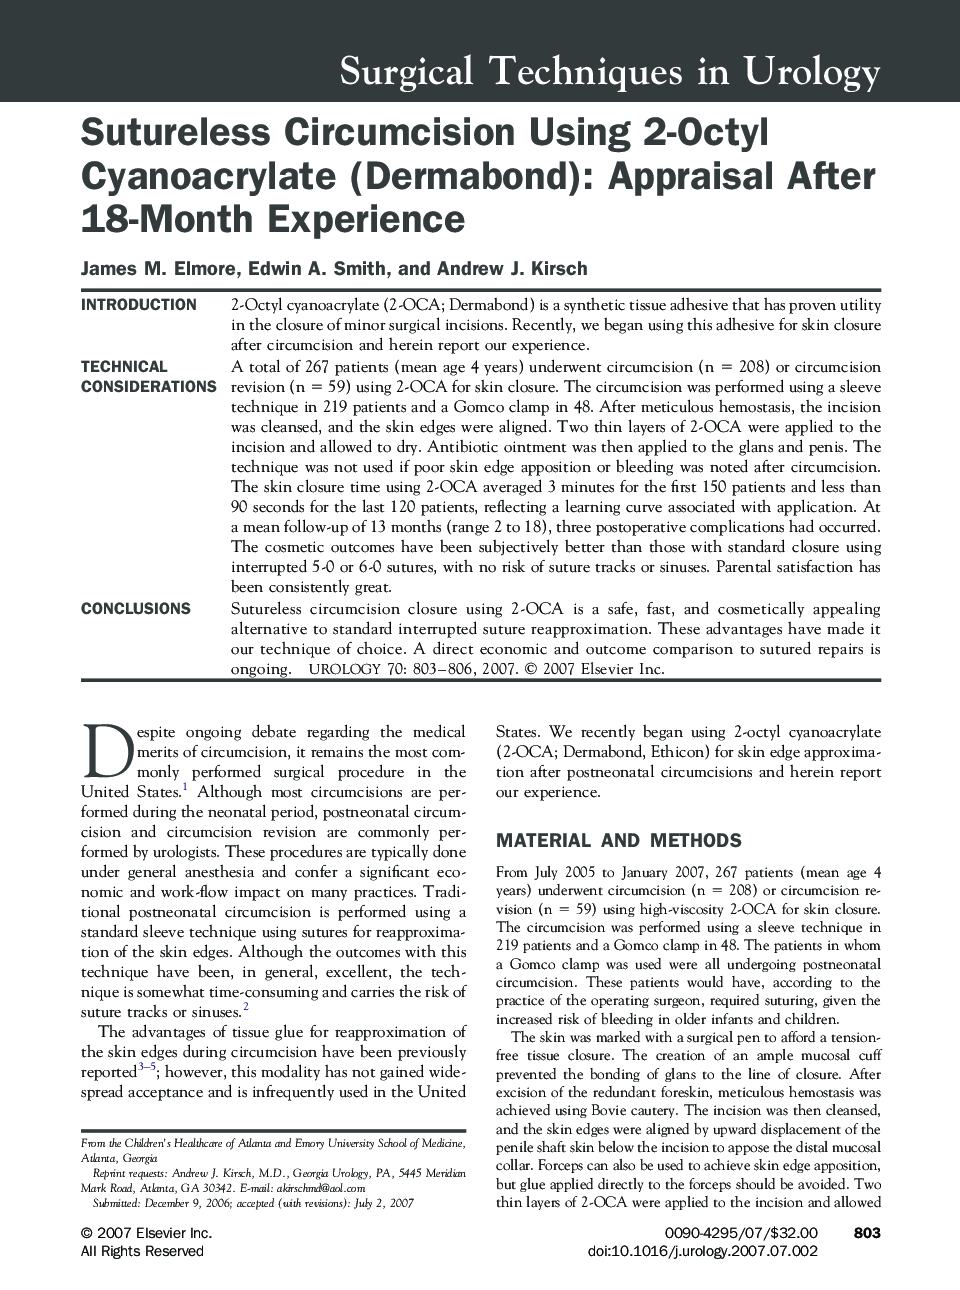 Sutureless Circumcision Using 2-Octyl Cyanoacrylate (Dermabond): Appraisal After 18-Month Experience